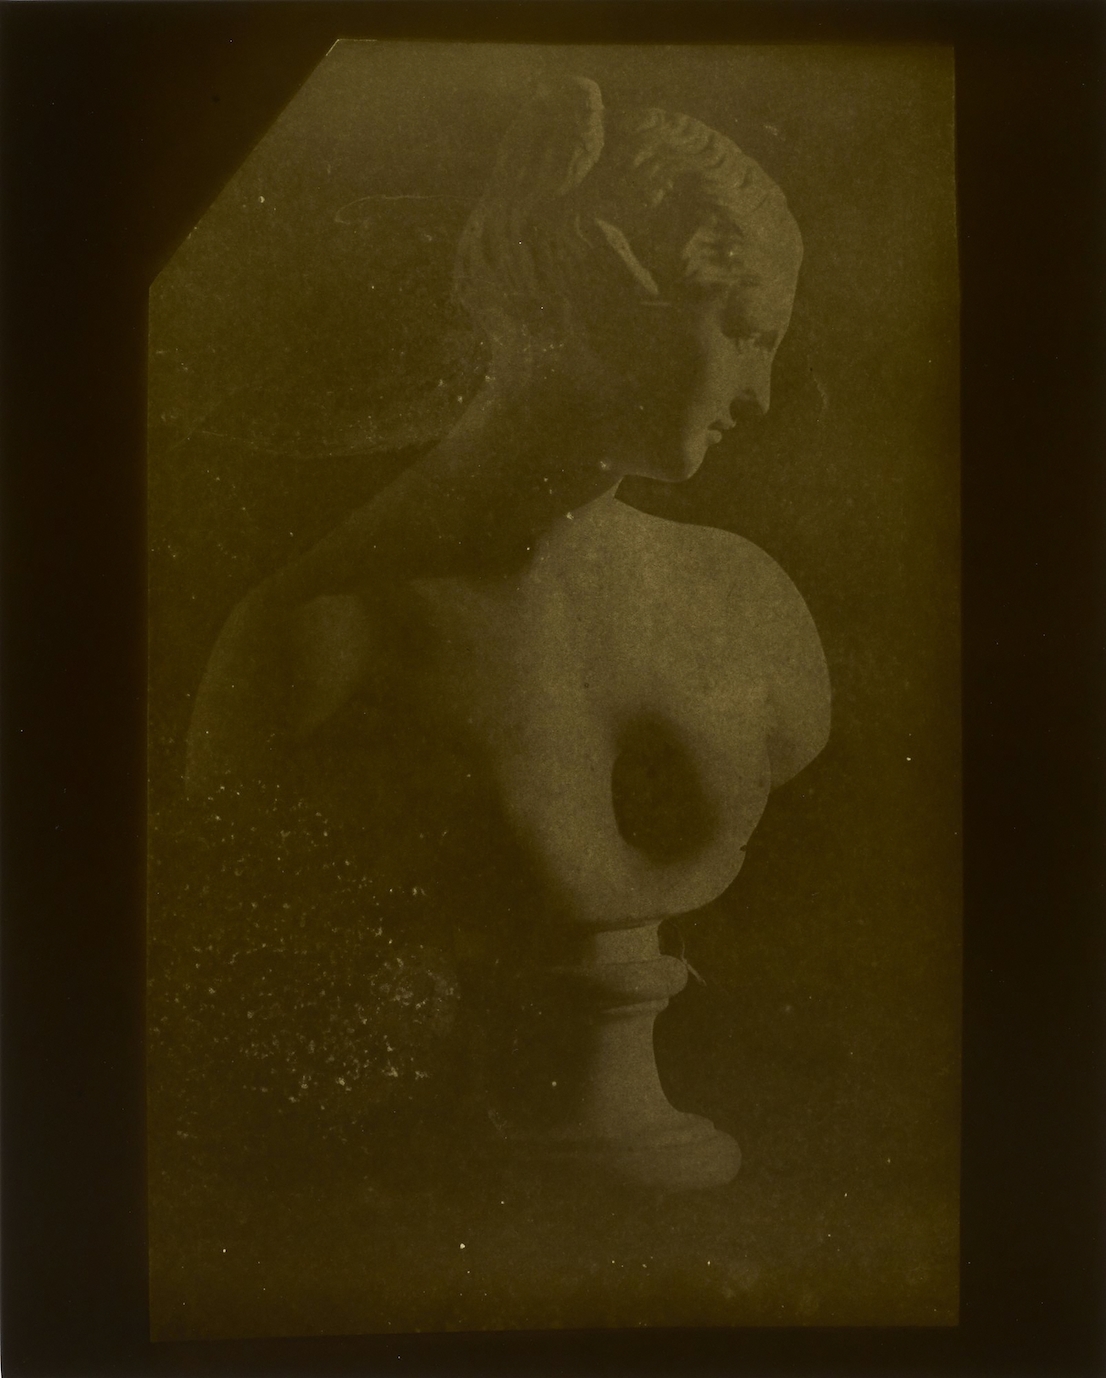 Hiroshi Sugimoto, Bust of Venus, November 26, 1840, 2009